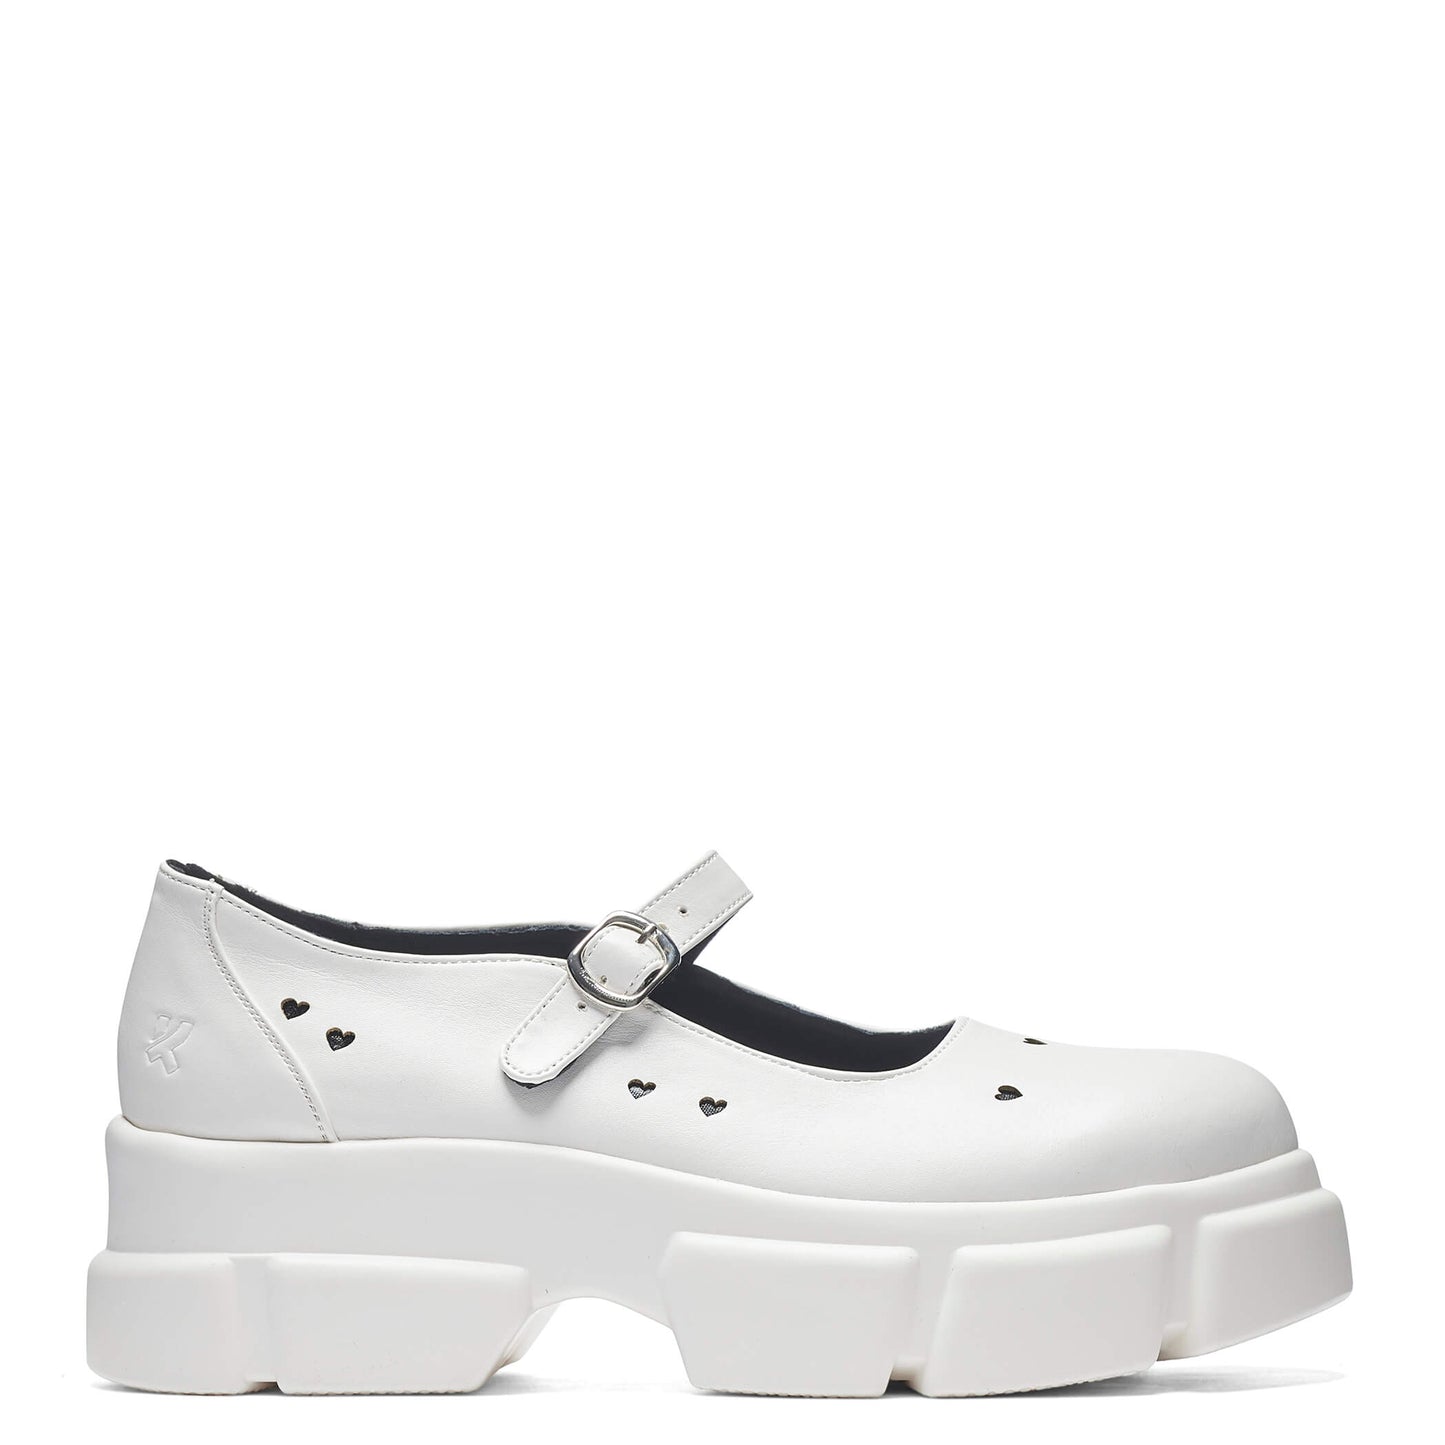 Harmony Heart Mary Jane Shoes - White - Shoes - KOI Footwear - White - Main View